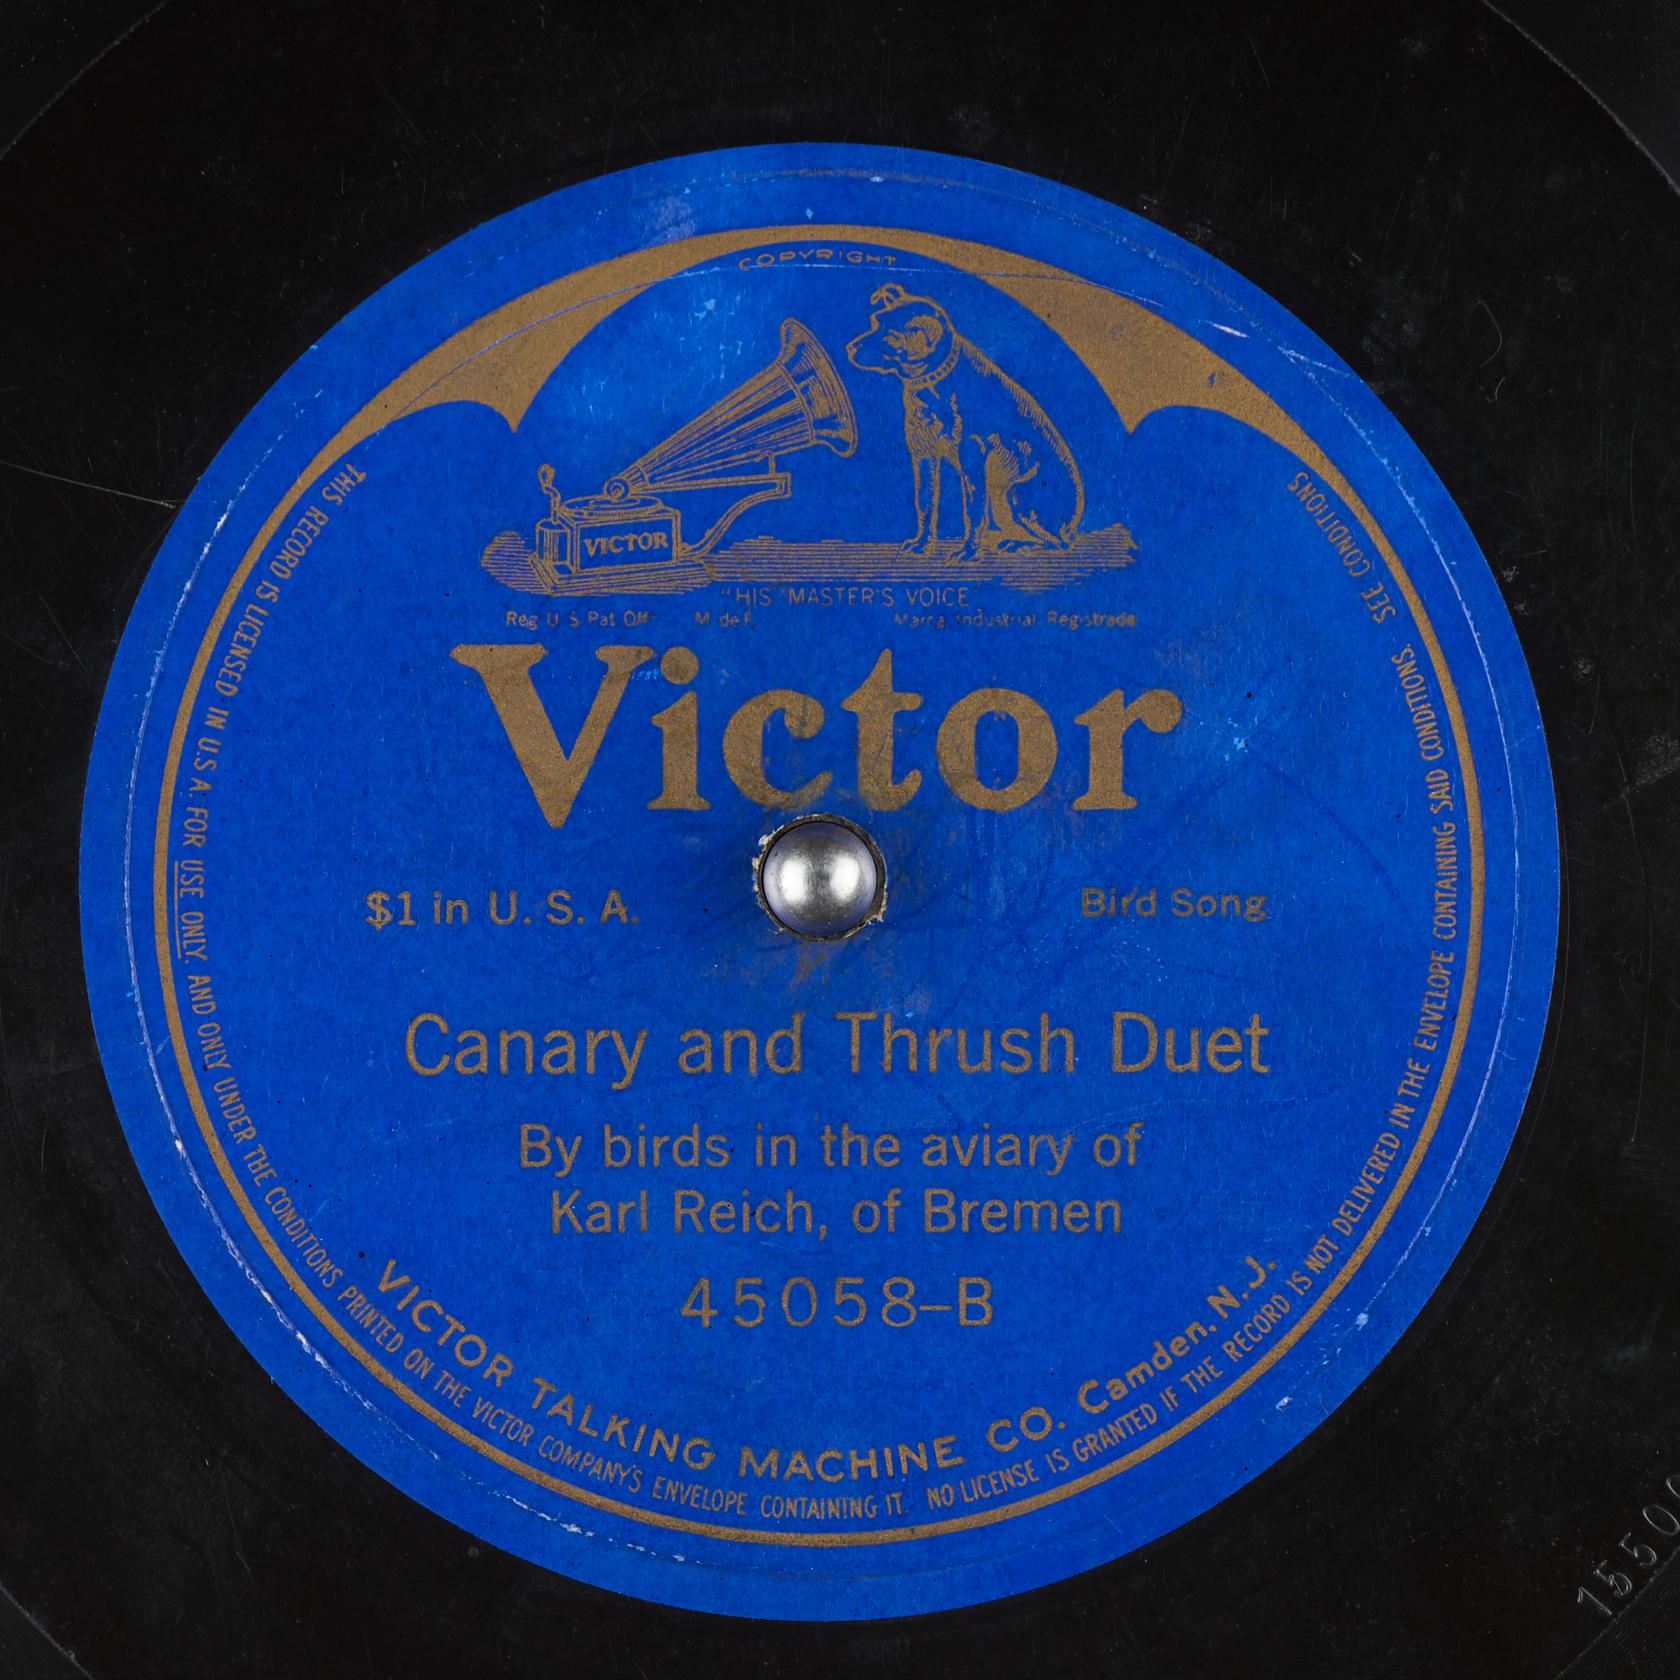 Canary and Thrush Duet (45058-B)